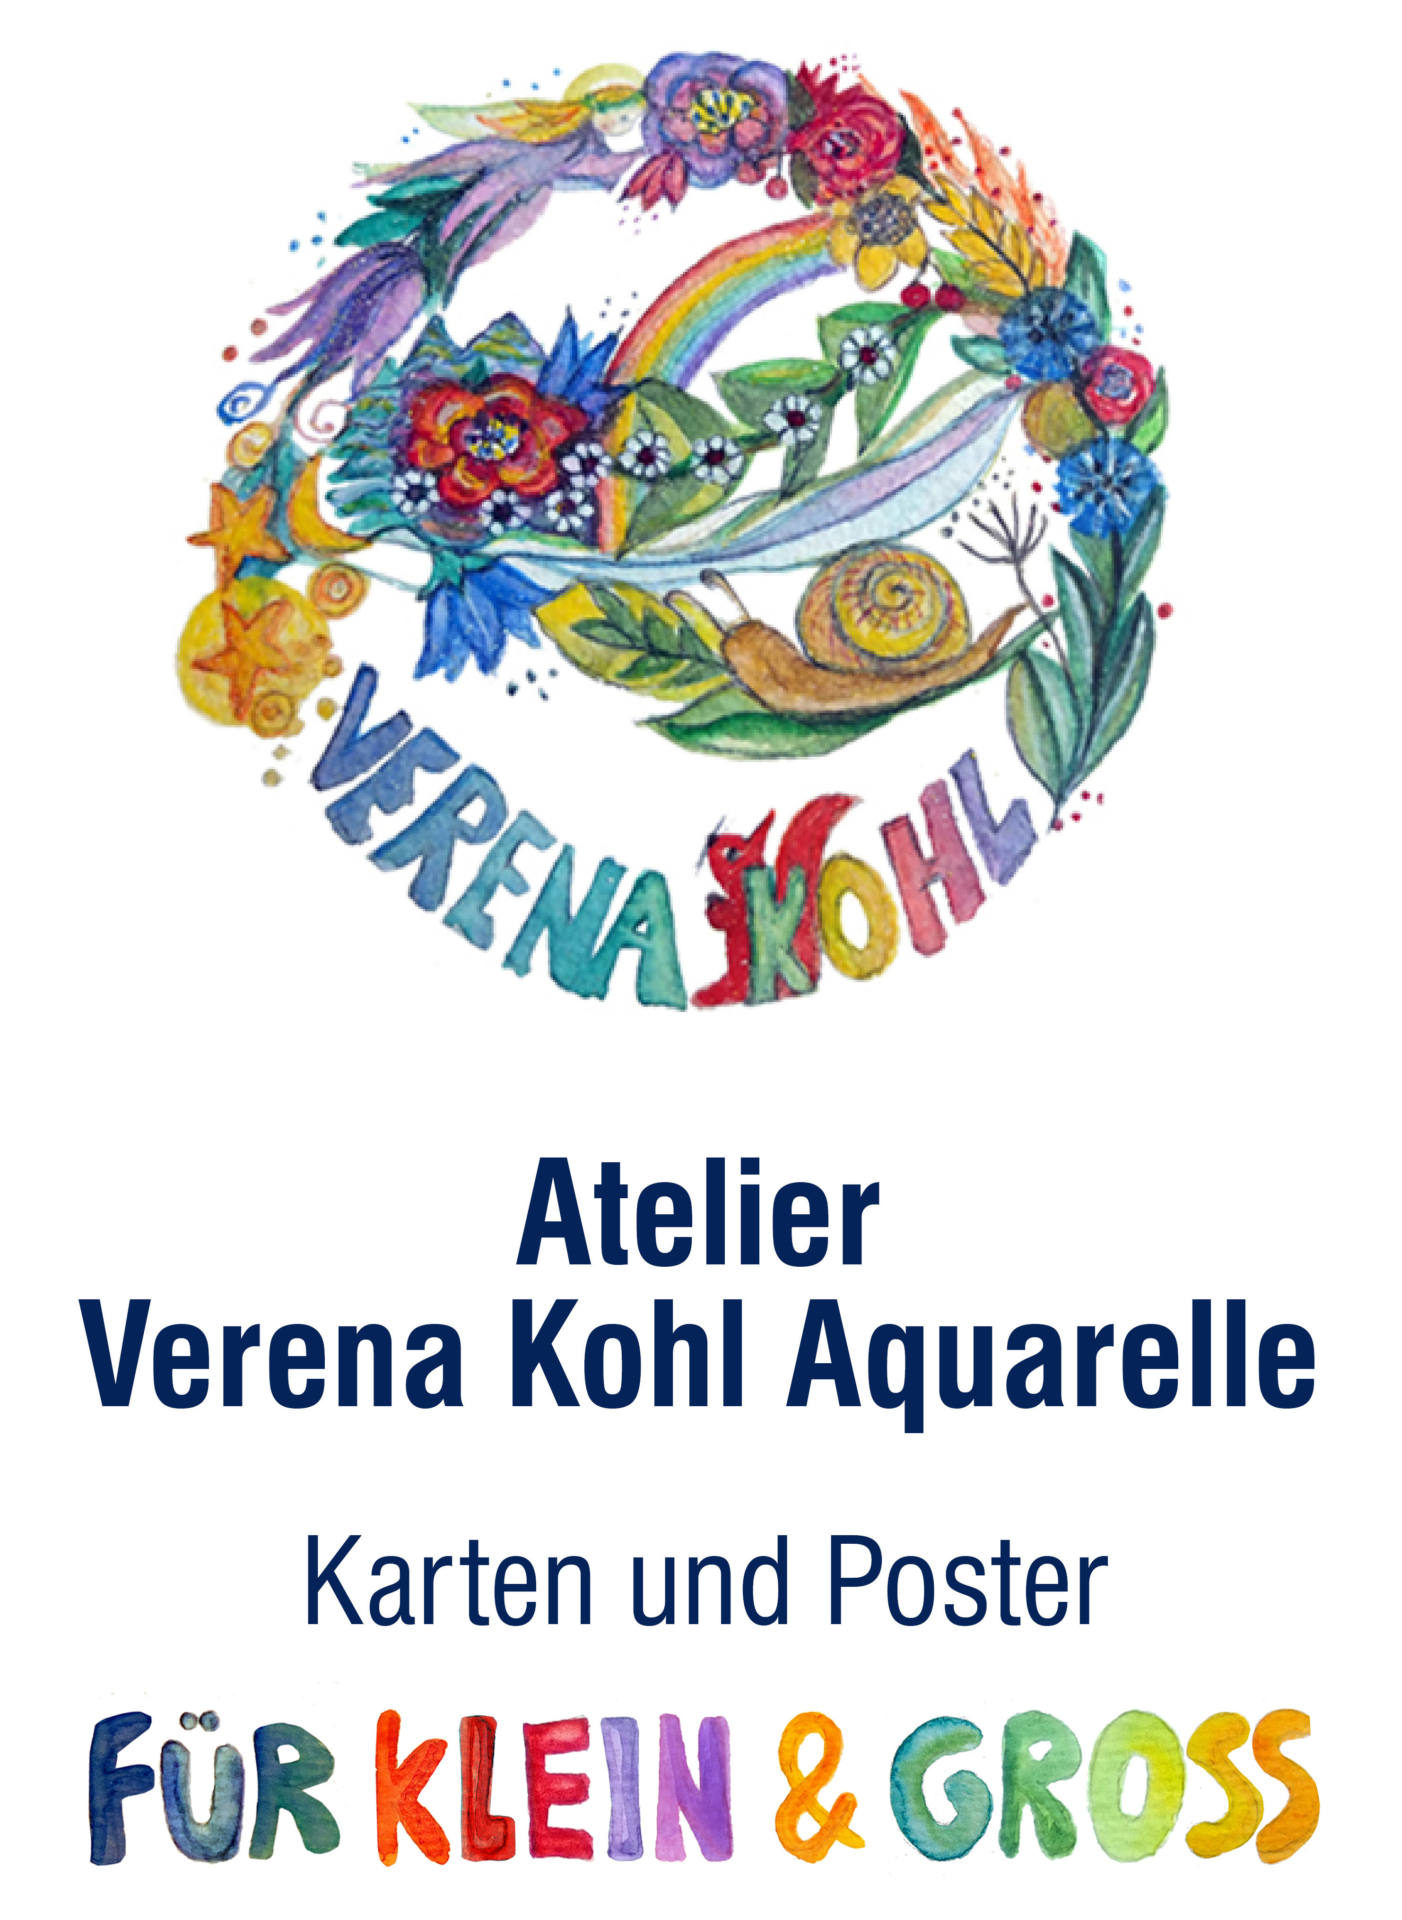 Atelier Verena Kohl Aquarelle